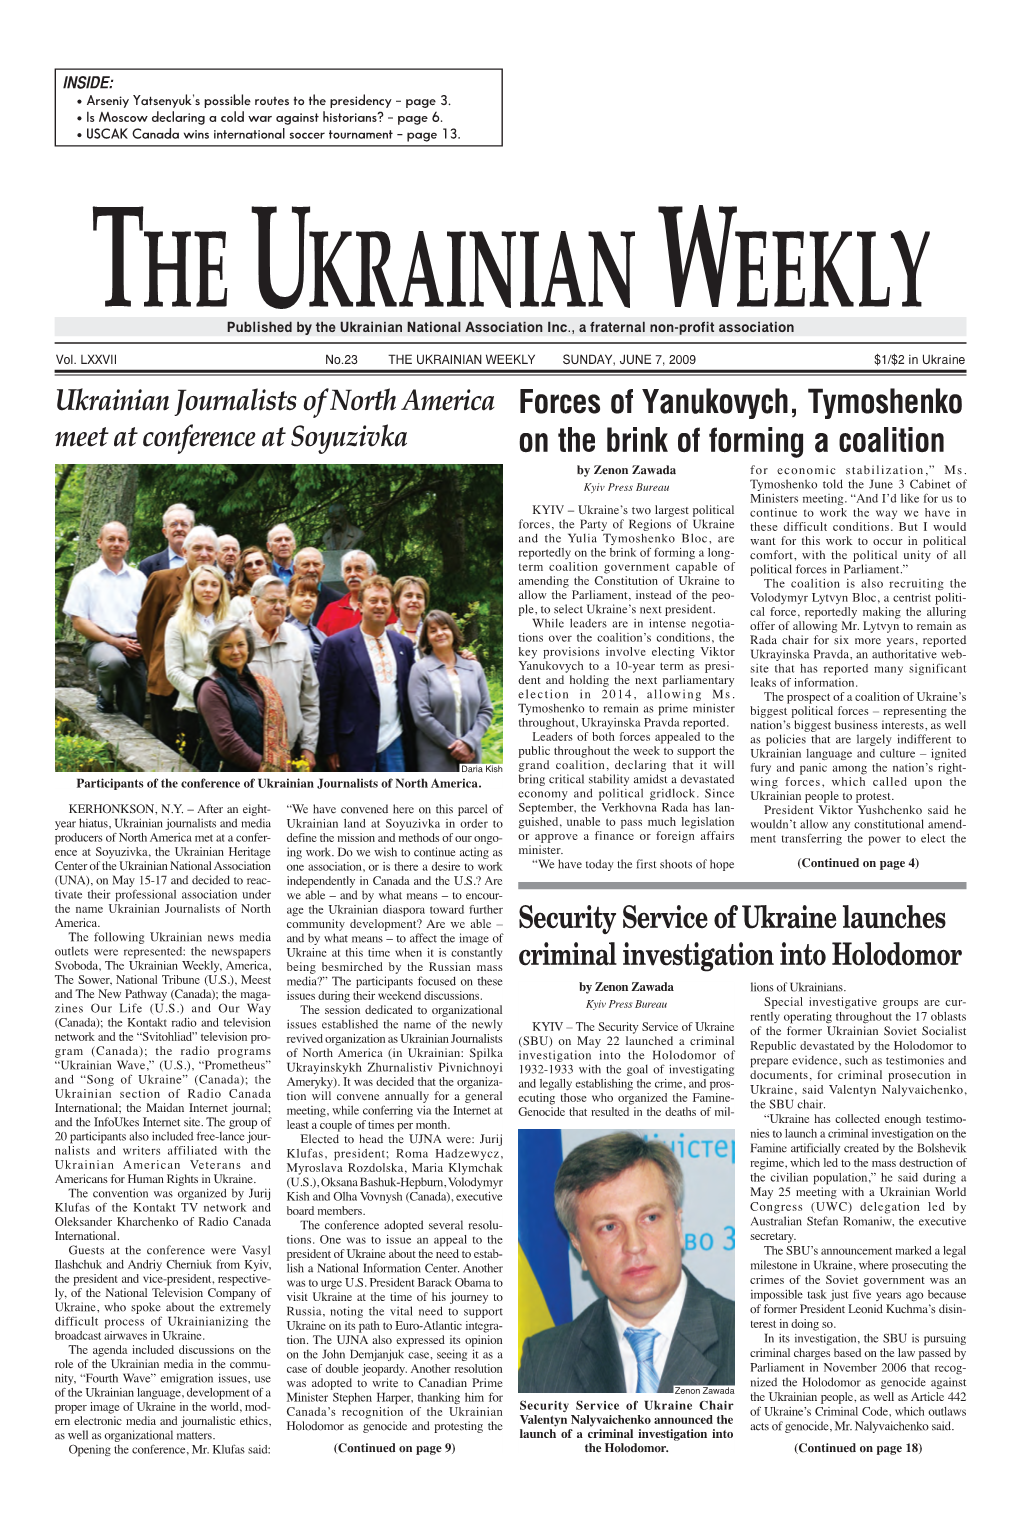 The Ukrainian Weekly 2009, No.23